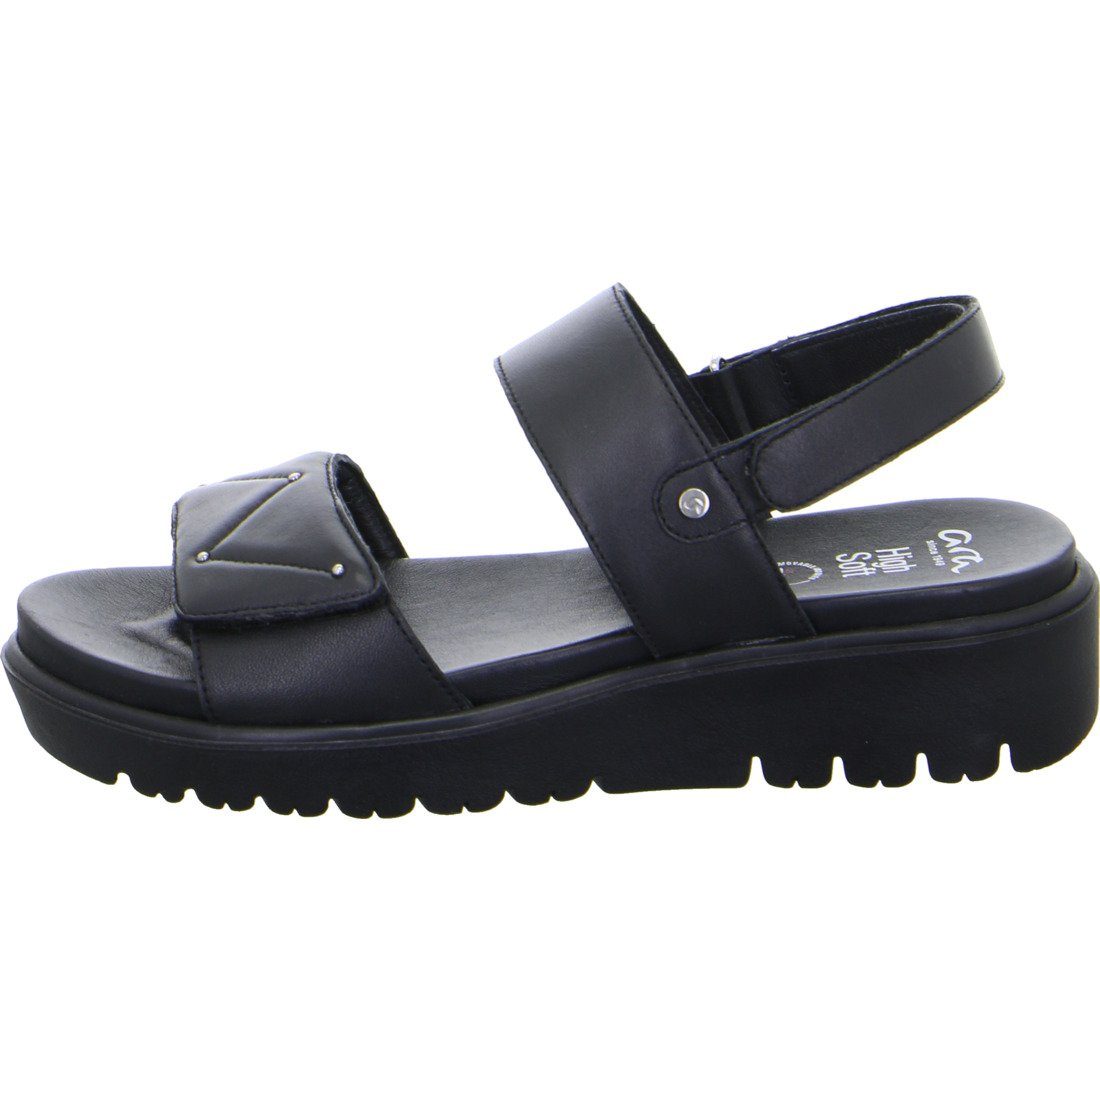 Ara Ara Schuhe, Sandalette Bilbao schwarz Glattleder 048120 - Sandalette